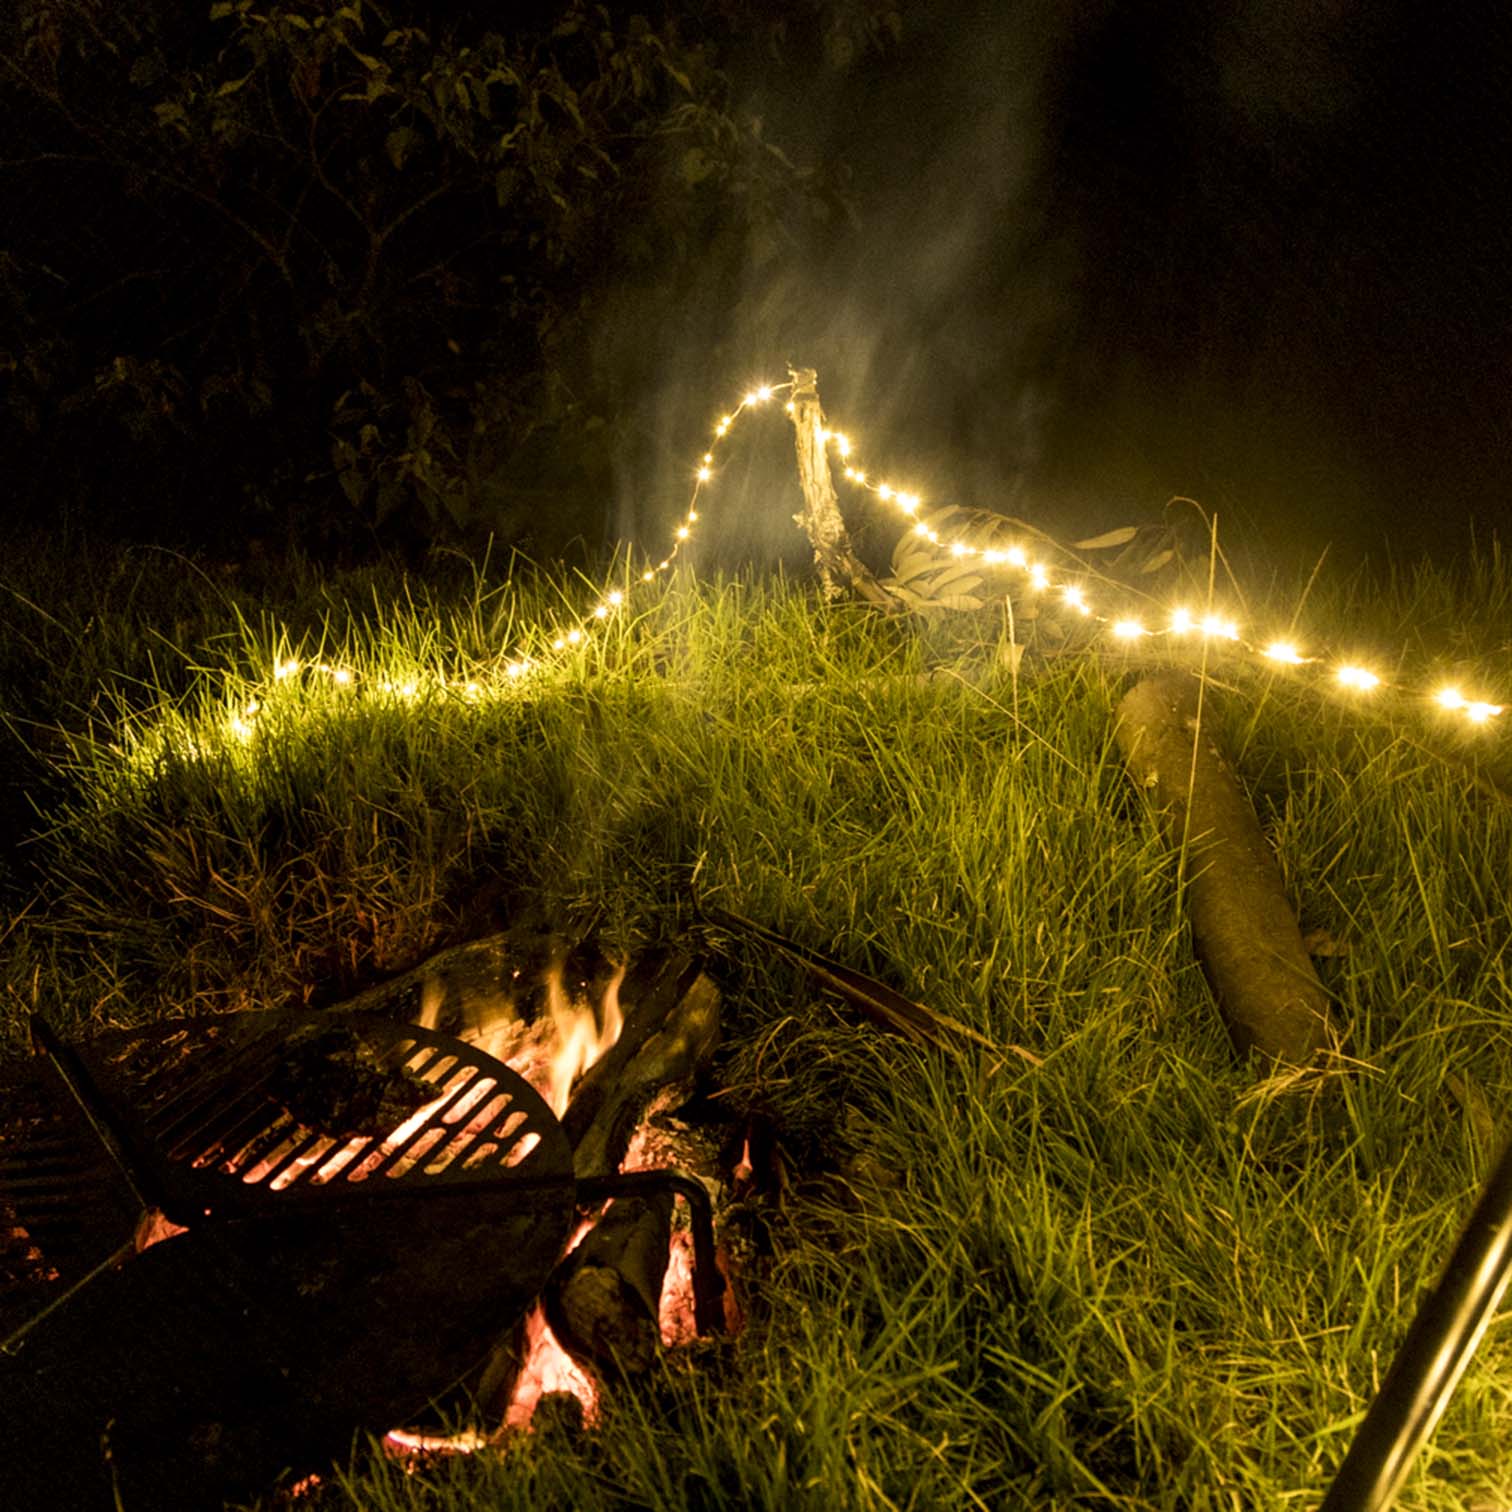 LED-Beleuchtung - Daiberls Campingshop